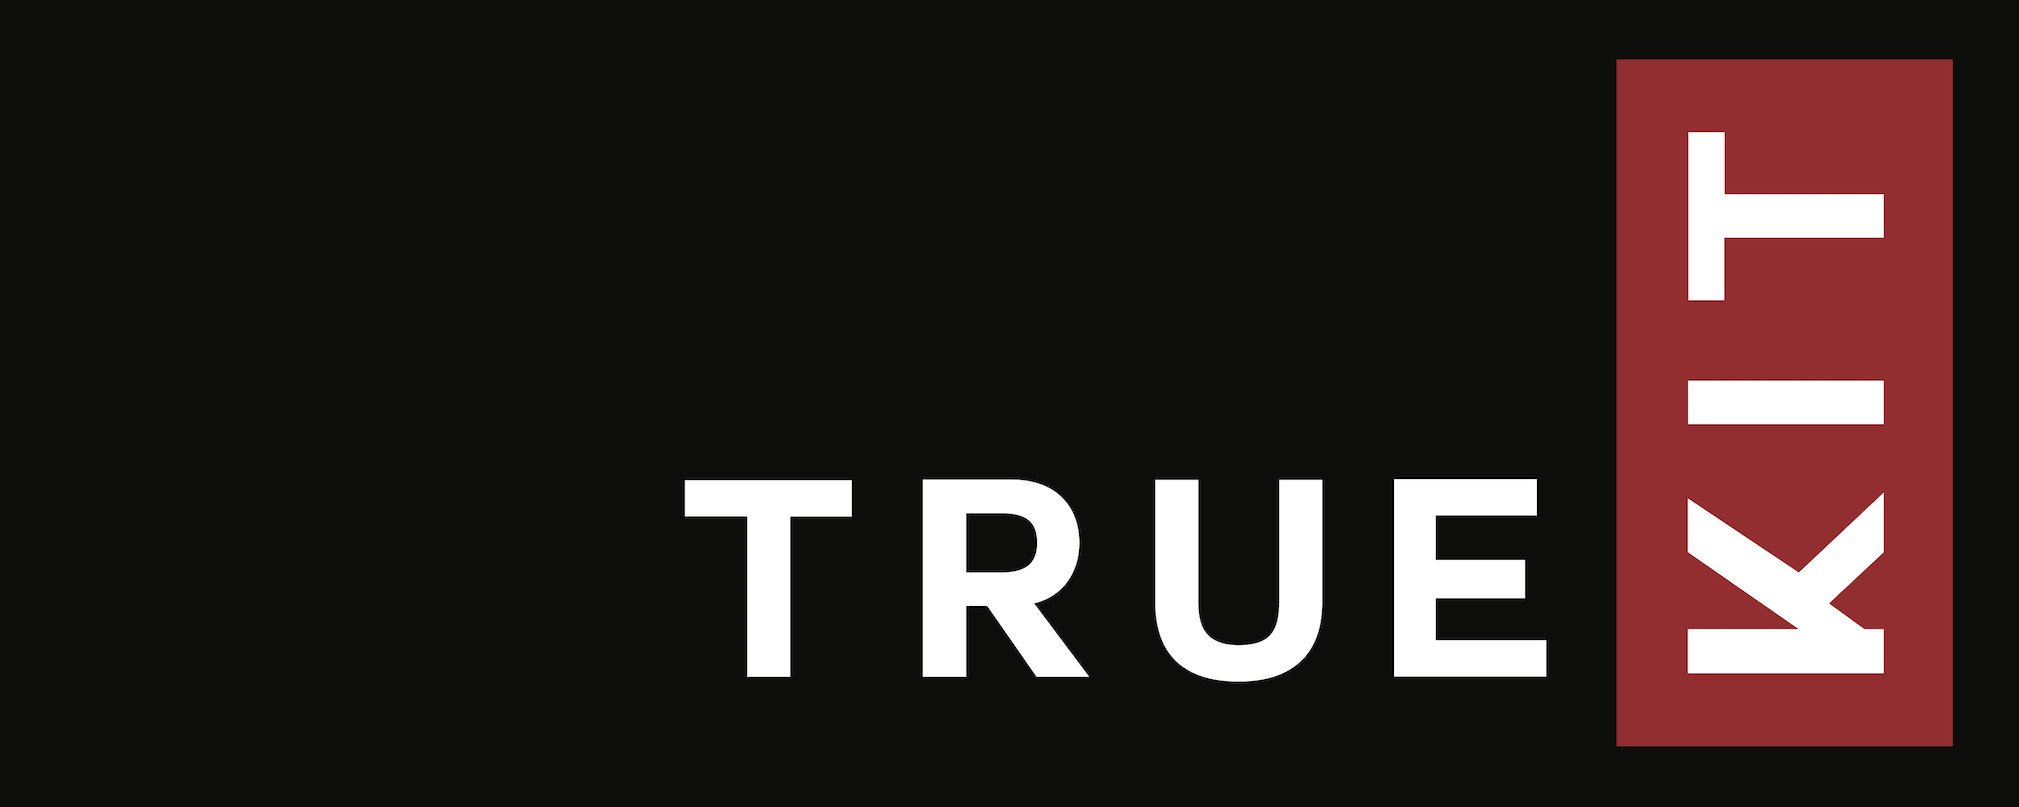 True Kit logo